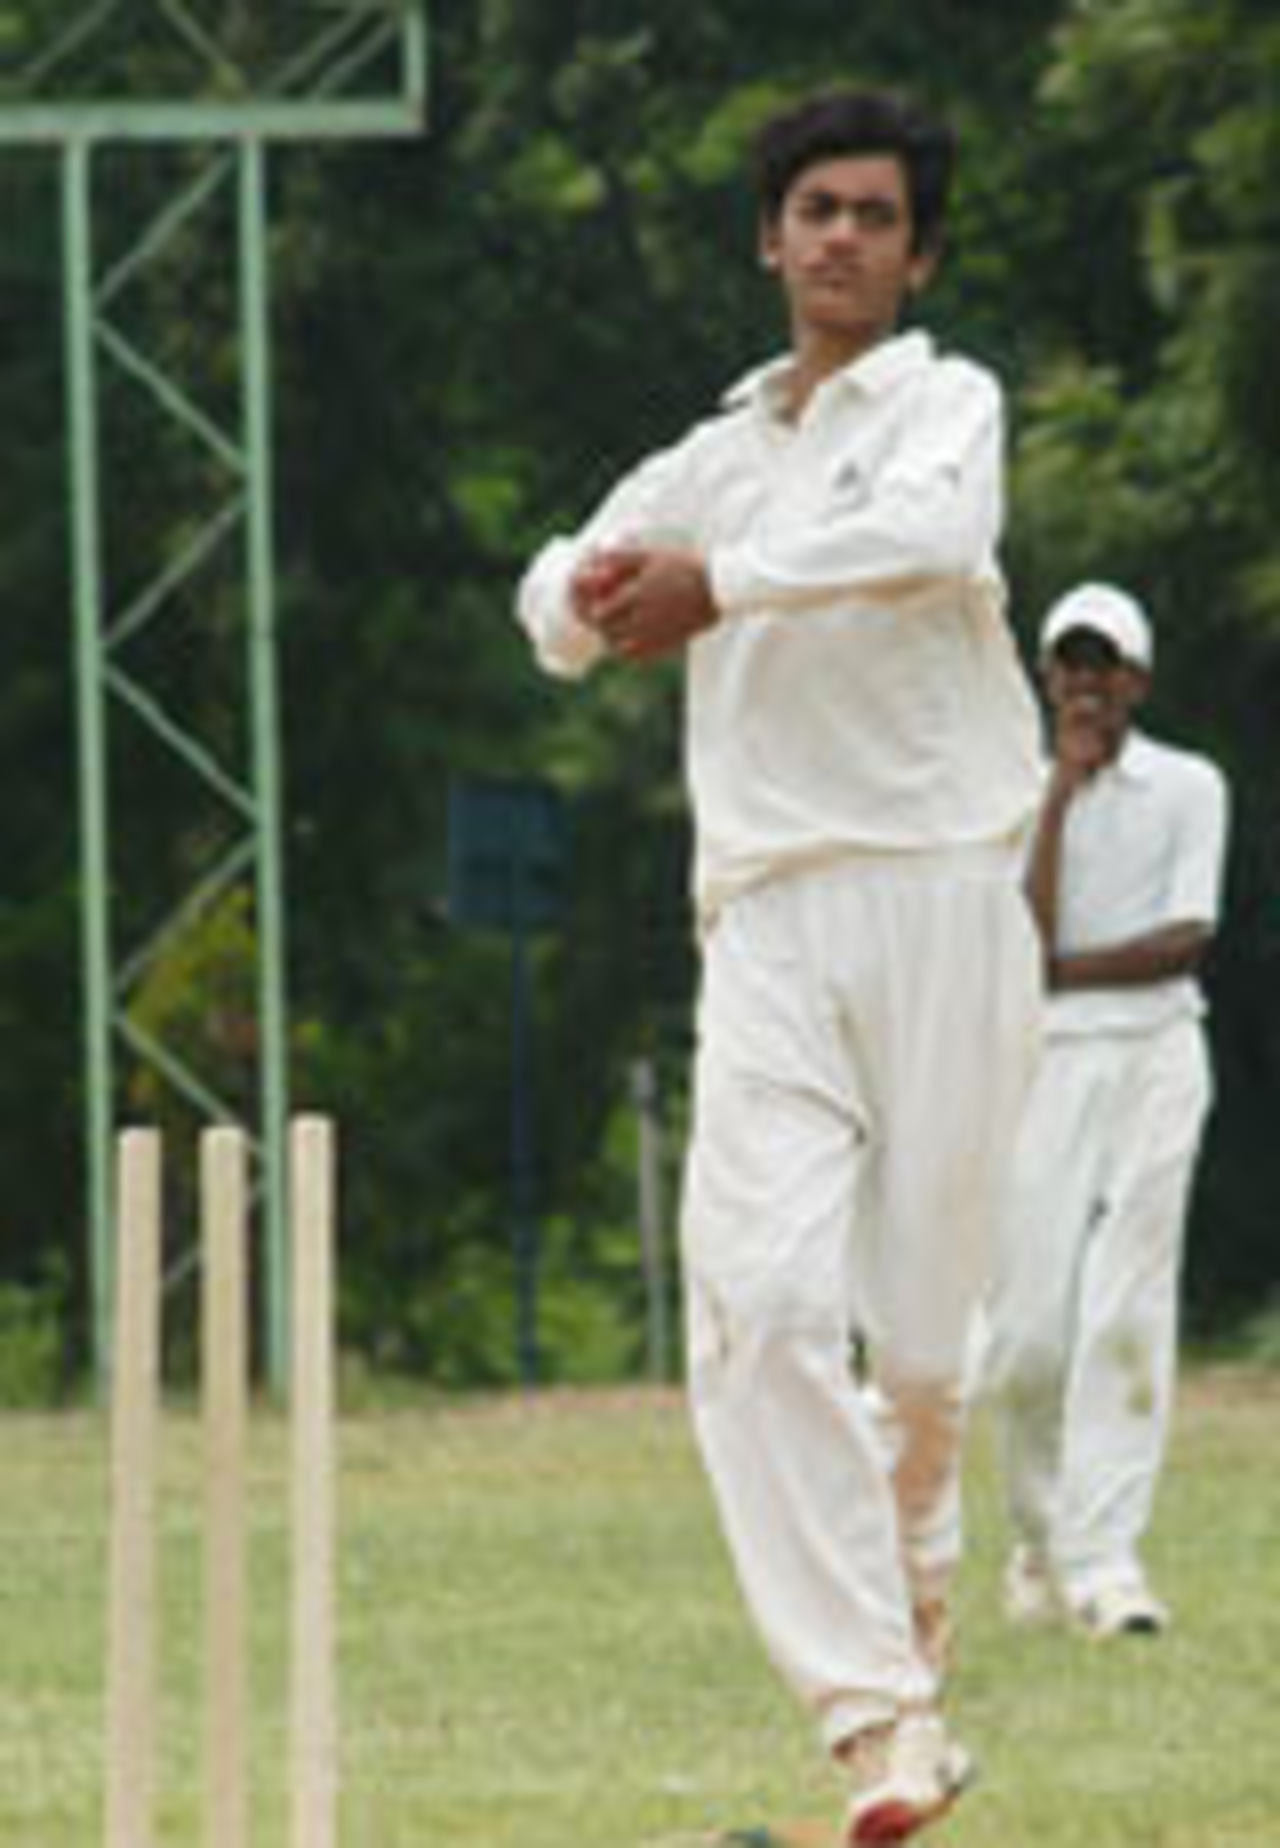 Mohammad Ayazuddin, son of Mohammad Azharuddin, skips in to bowl